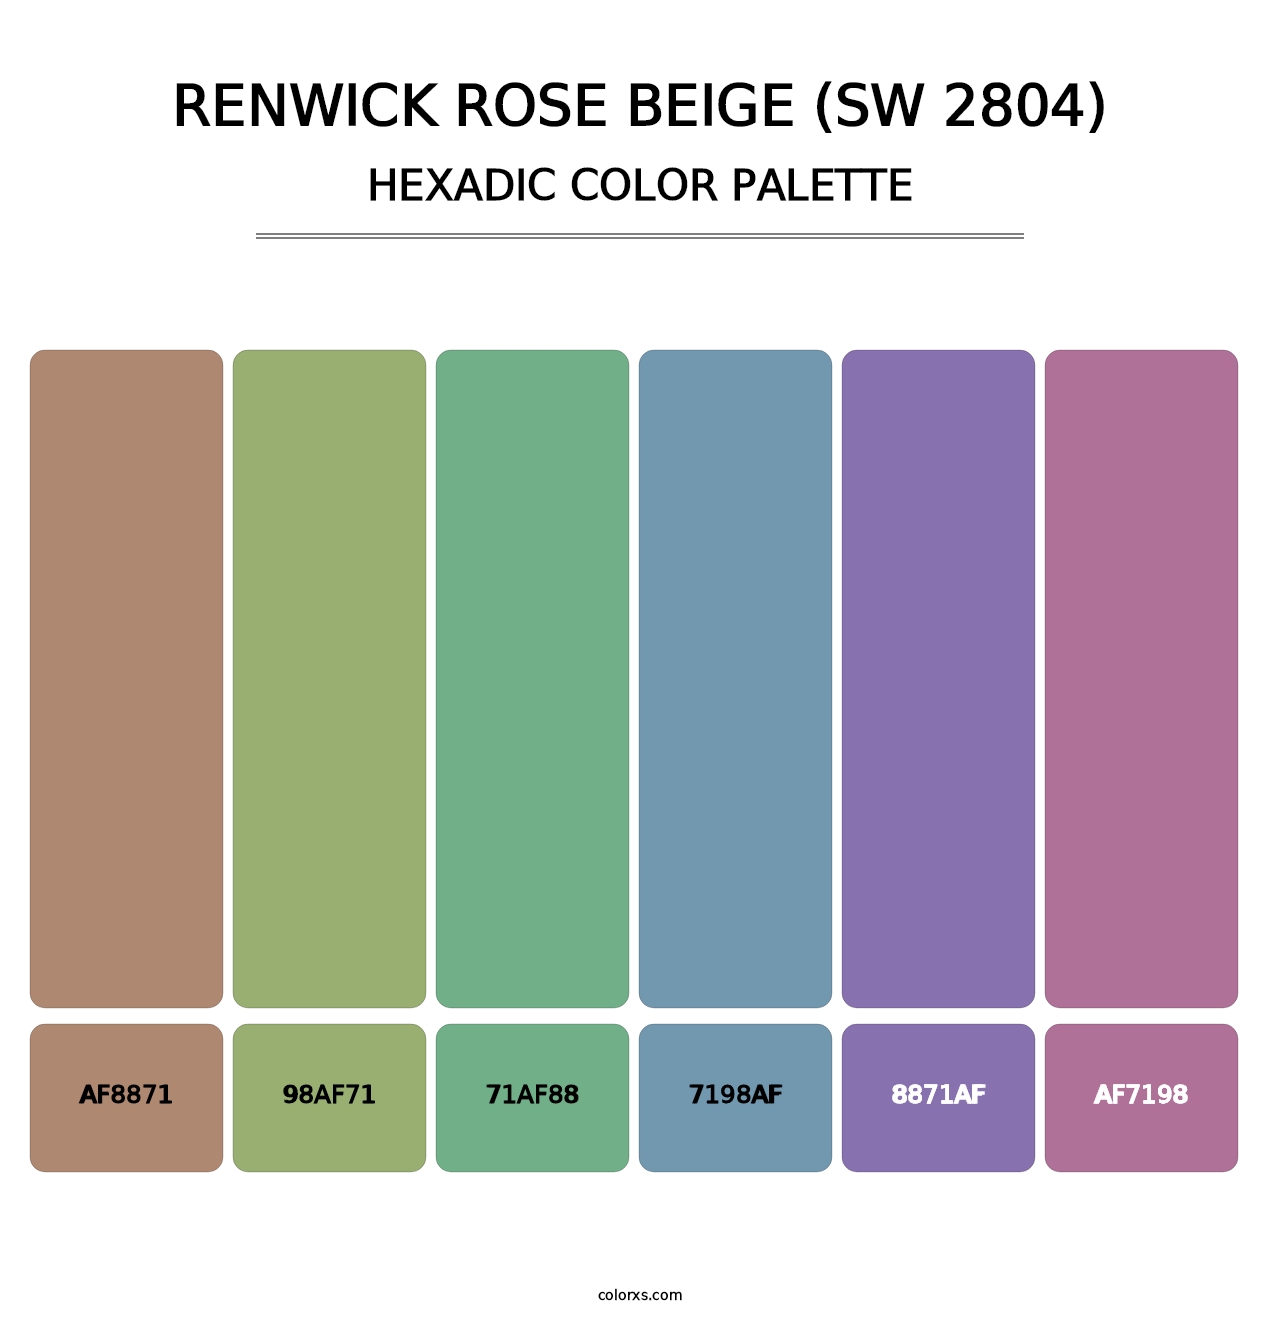 Renwick Rose Beige (SW 2804) - Hexadic Color Palette